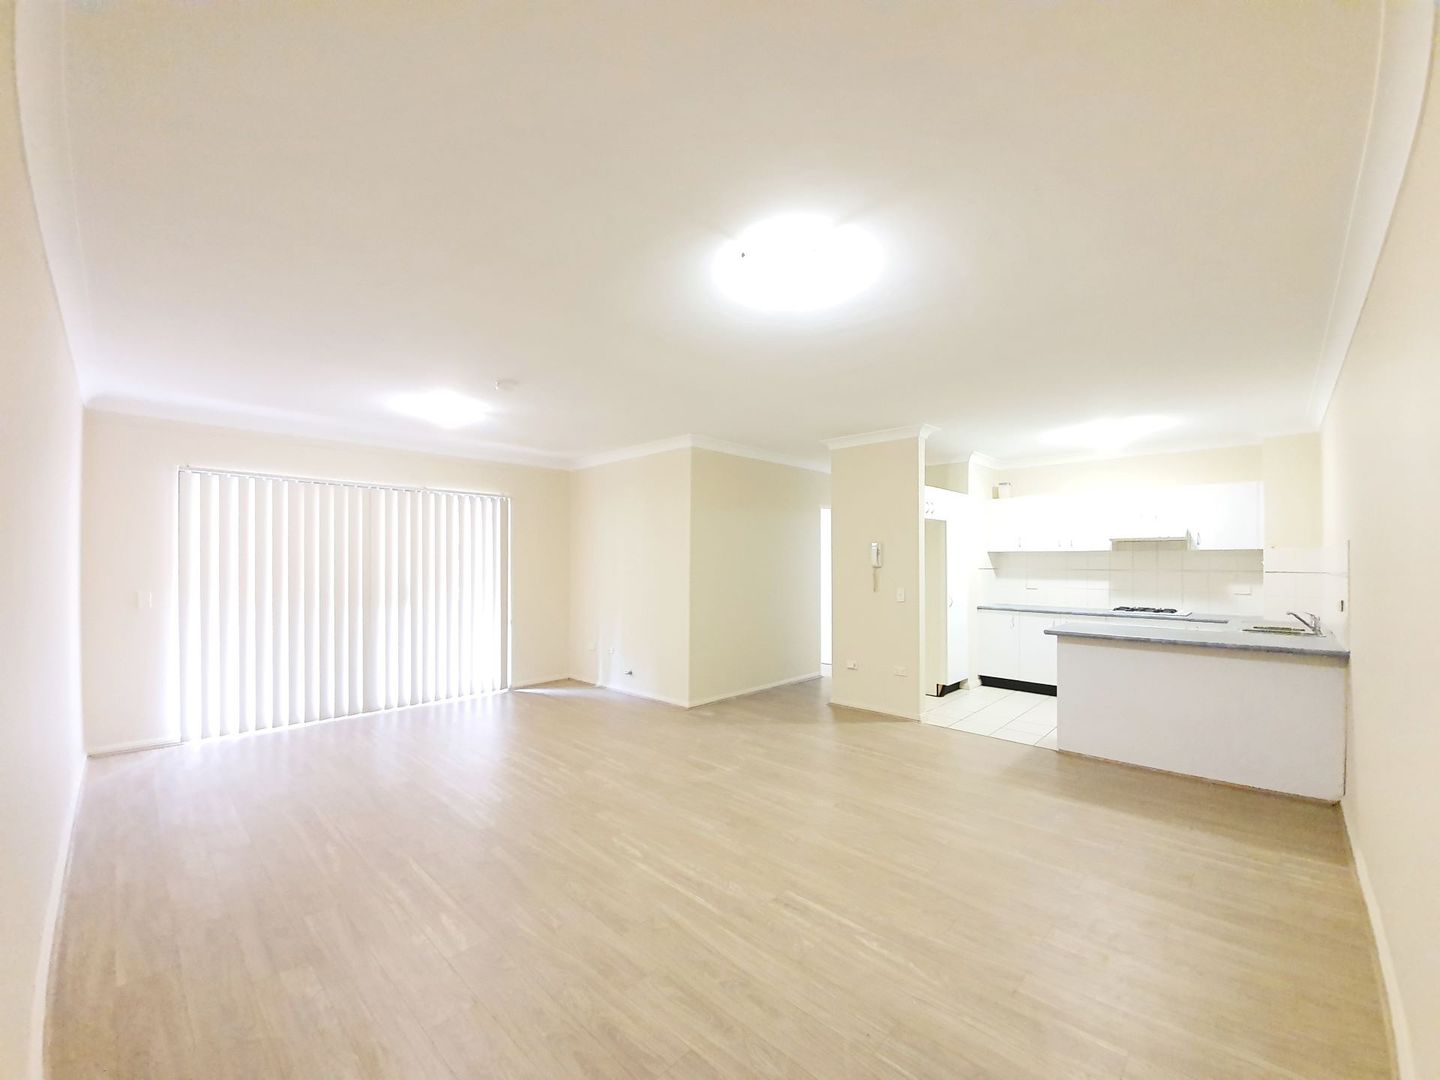 2 bedrooms Apartment / Unit / Flat in 22/8 Hythe Street MOUNT DRUITT NSW, 2770